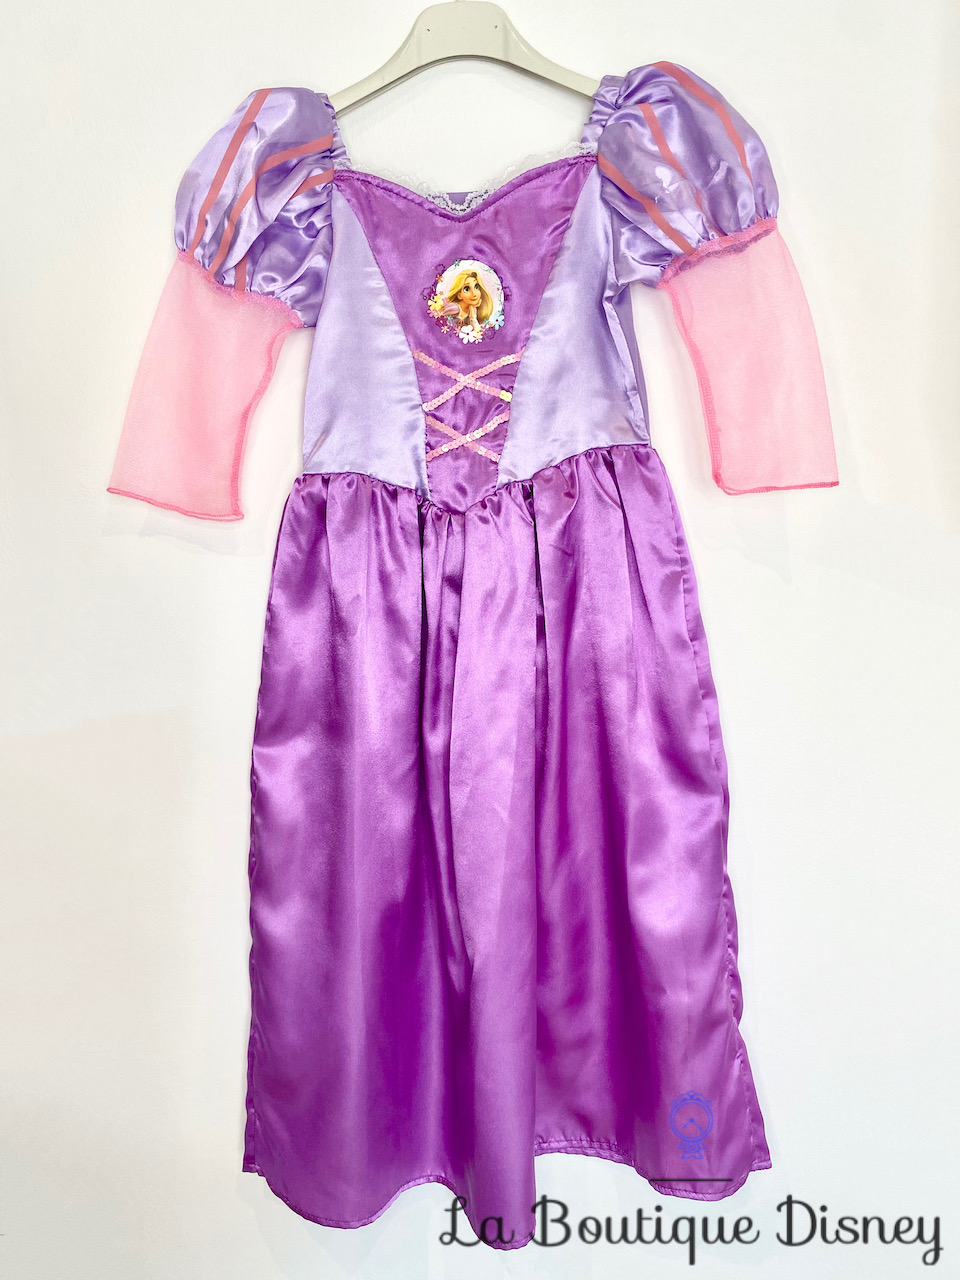 Déguisement Raiponce Disney Rubies Costume taille 7-8 ans robe princesse violette